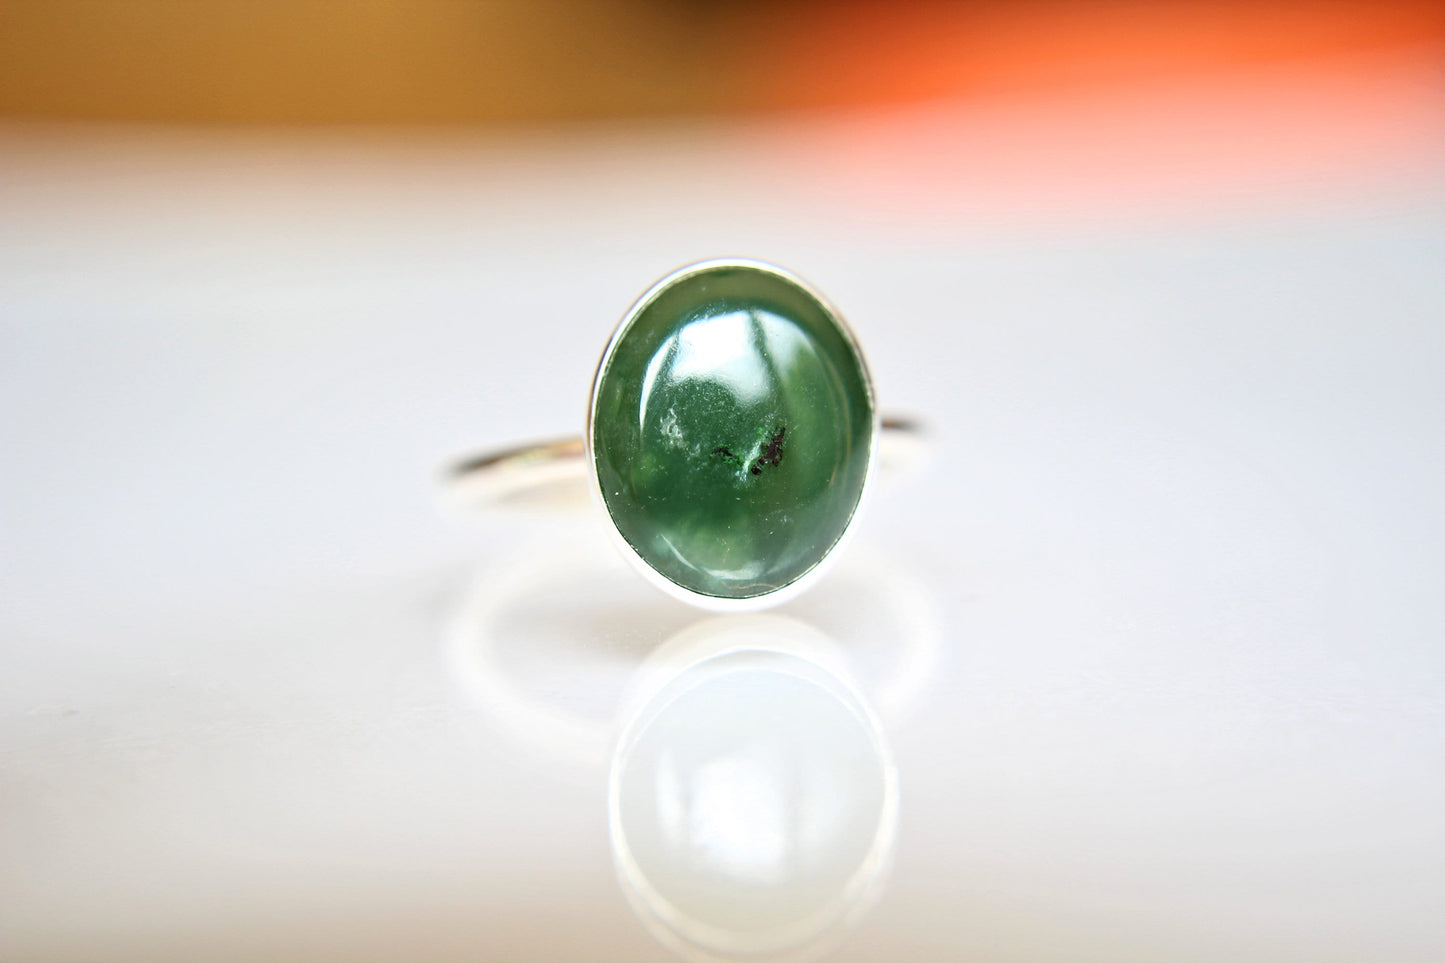 Large Jade Ring, Gemstone Ring, Green Jade Ring, Green, Modern, Simple, Everyday, Gift, Gemstone Jewelry, Natural Stone, Simple Ring